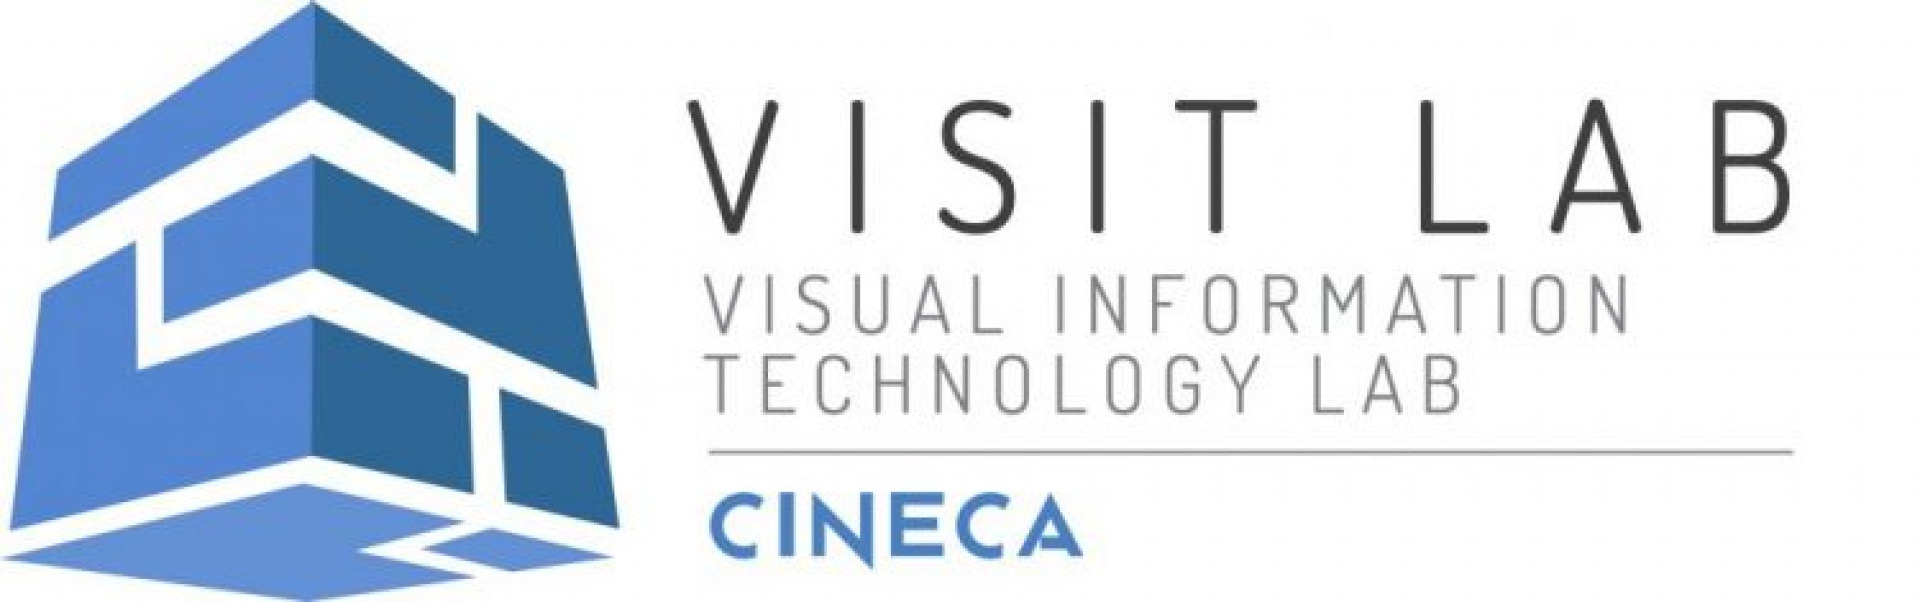 Visit lab Cineca - Laboratorio di Visual Information Technology - 